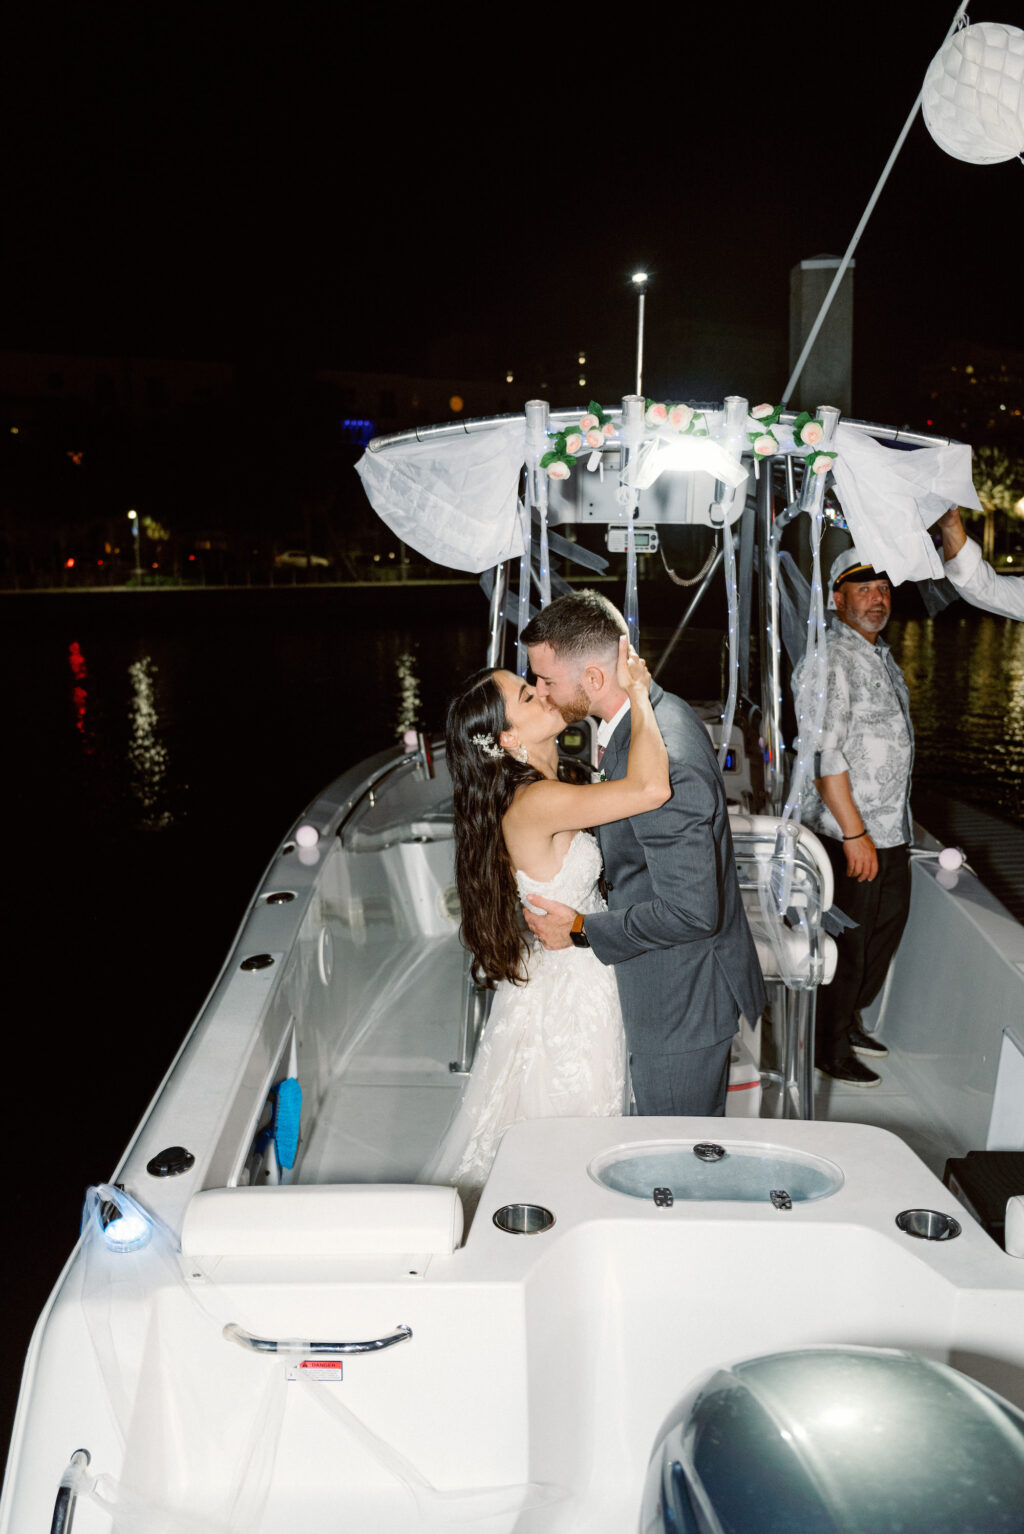 Boat Grand Exit Wedding Reception Send Off Ideas | Tampa Riverwalk